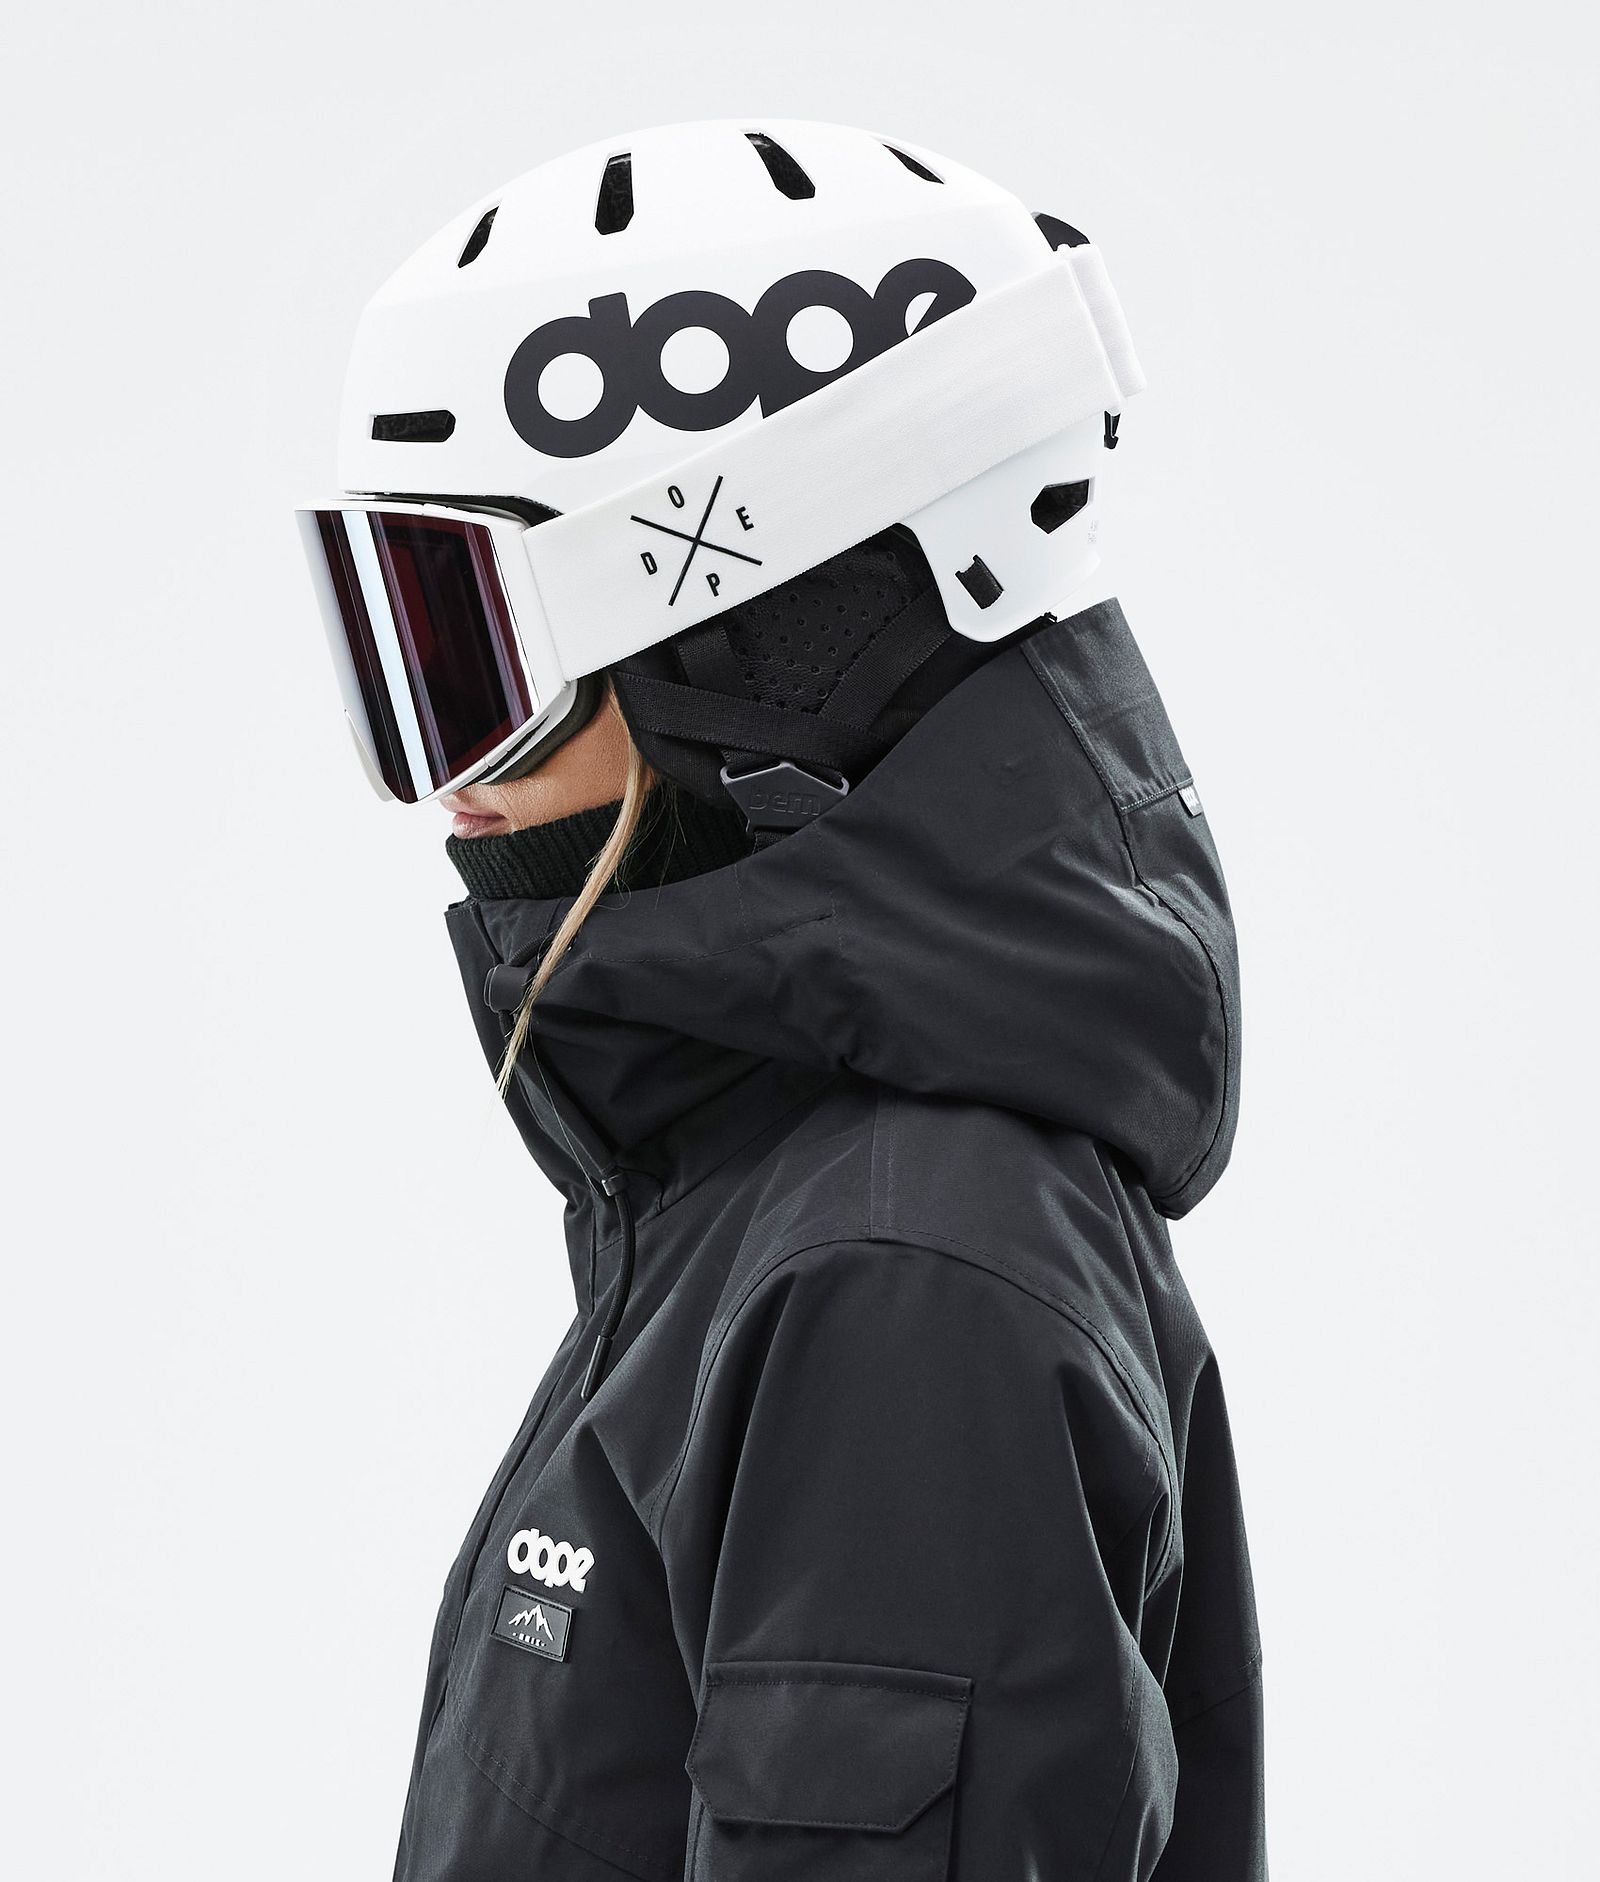 Macon 2.0 スキーヘルメット Classic Matte White w/ Black